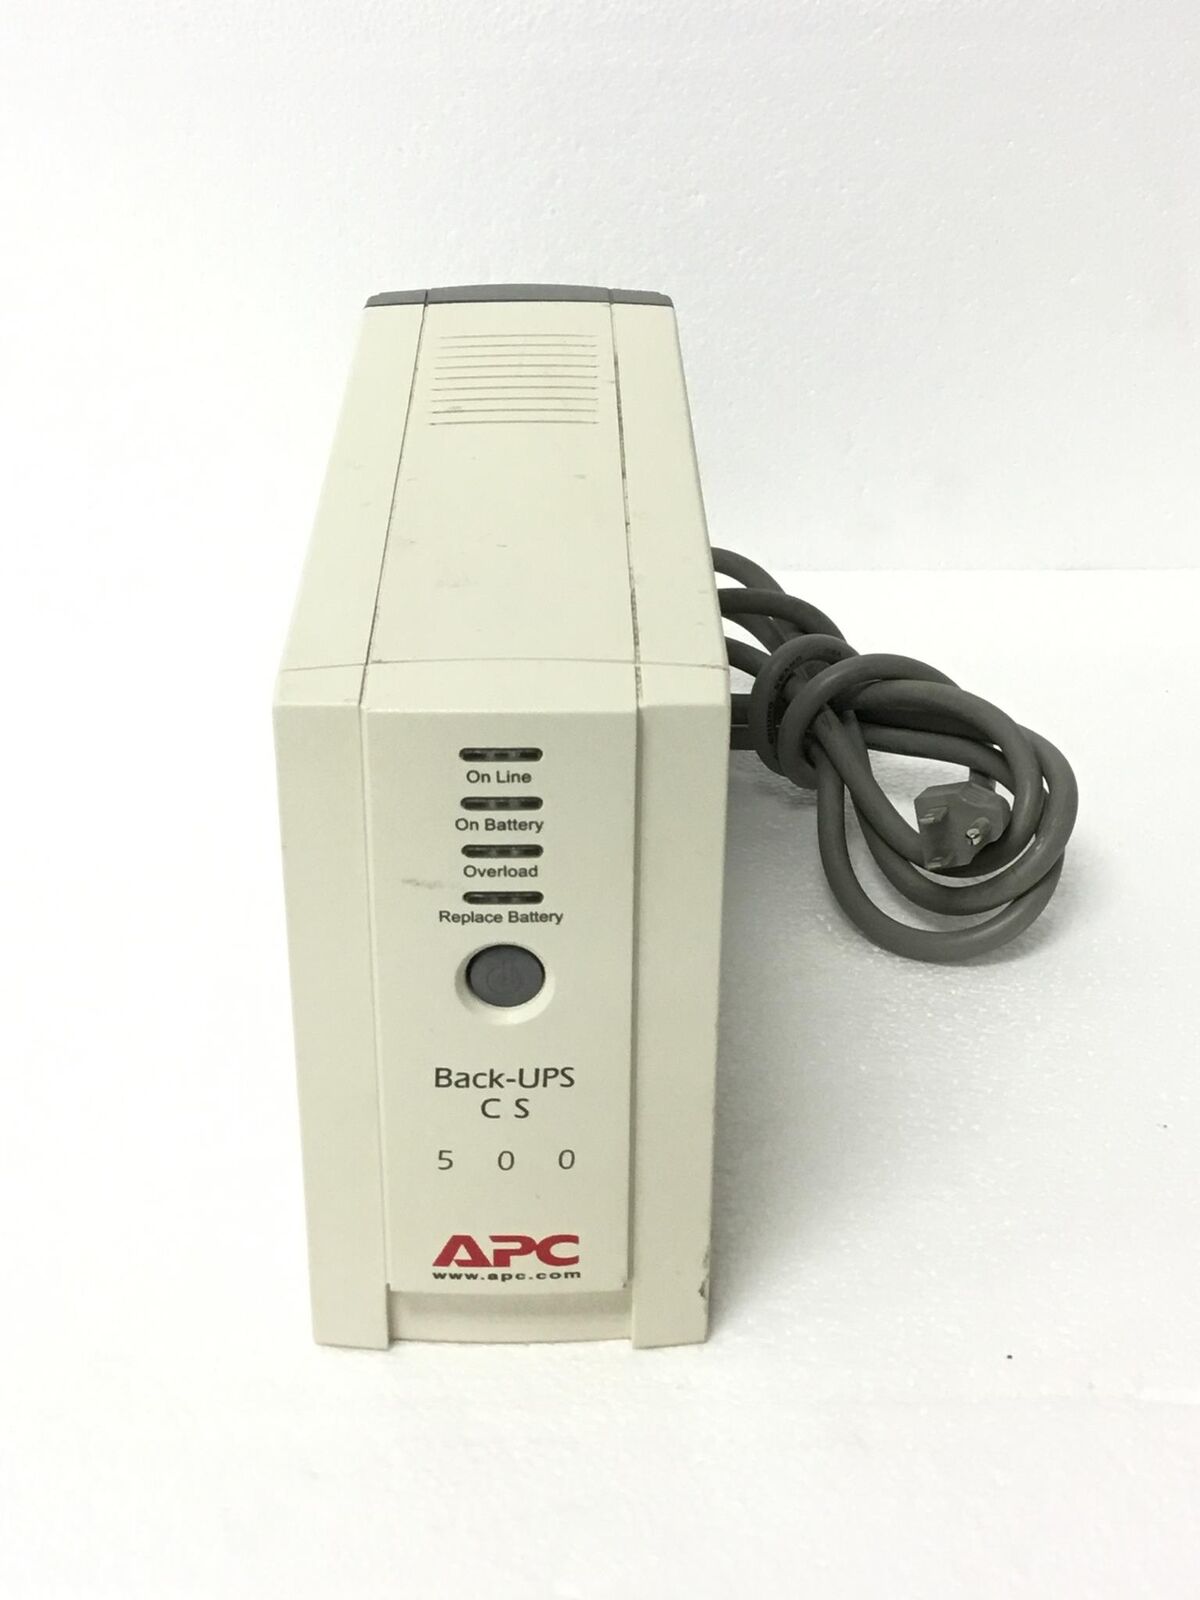 APC UPS CS 500 Back-UPS Backup & Surge Protection BK500 w/Cable, no Battery QTY